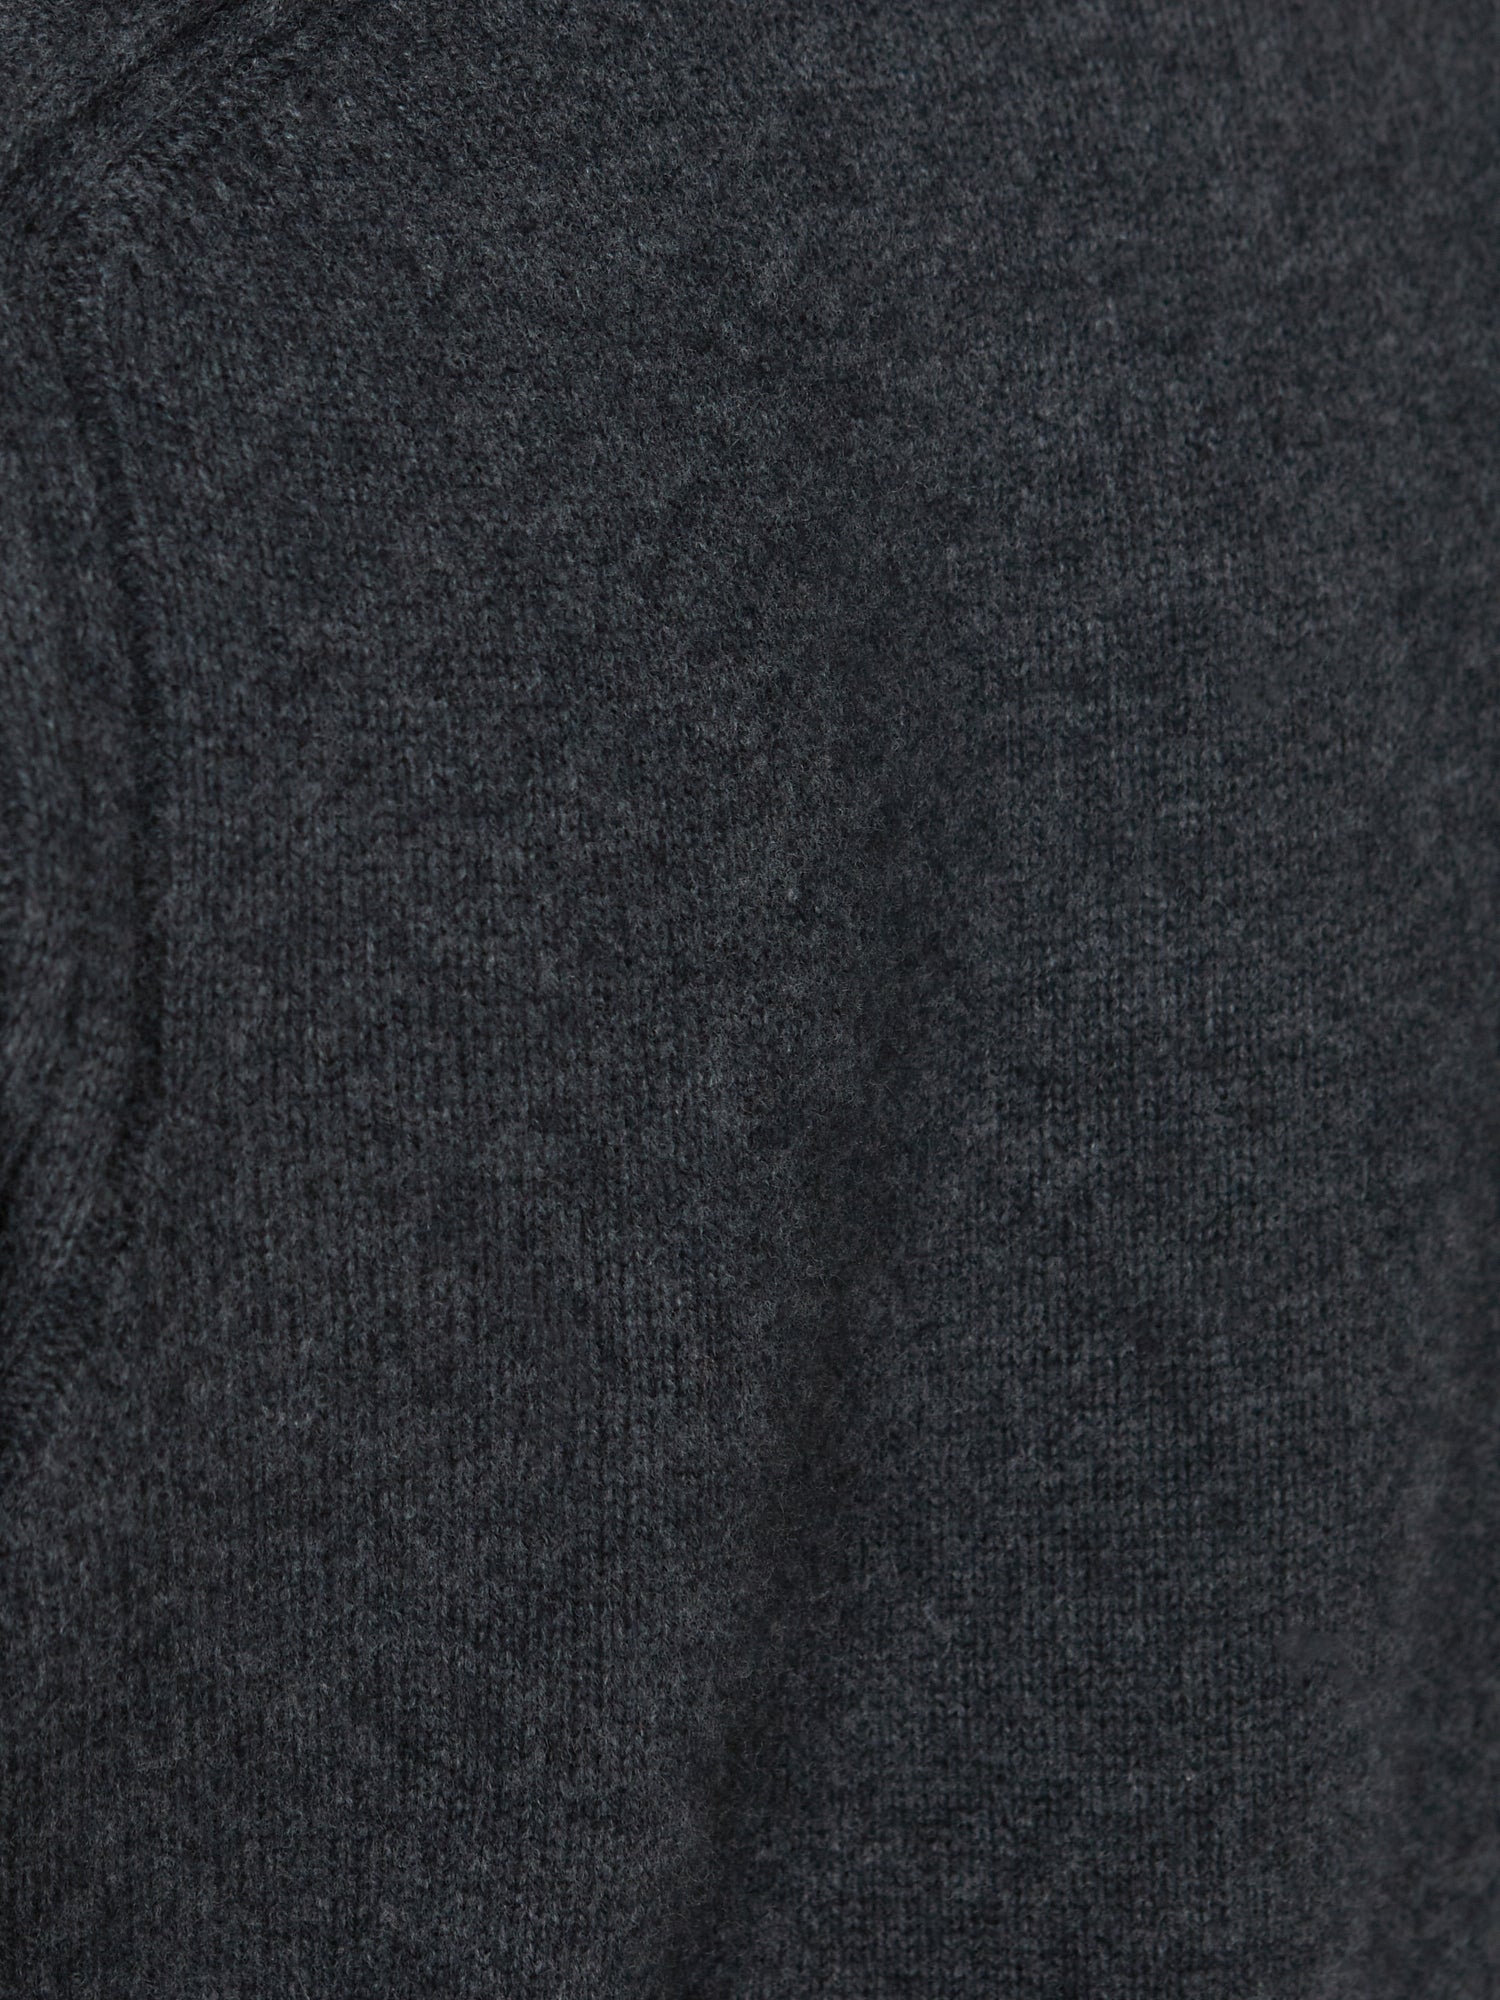 Eton dark grey layered crewneck sweater close up 2